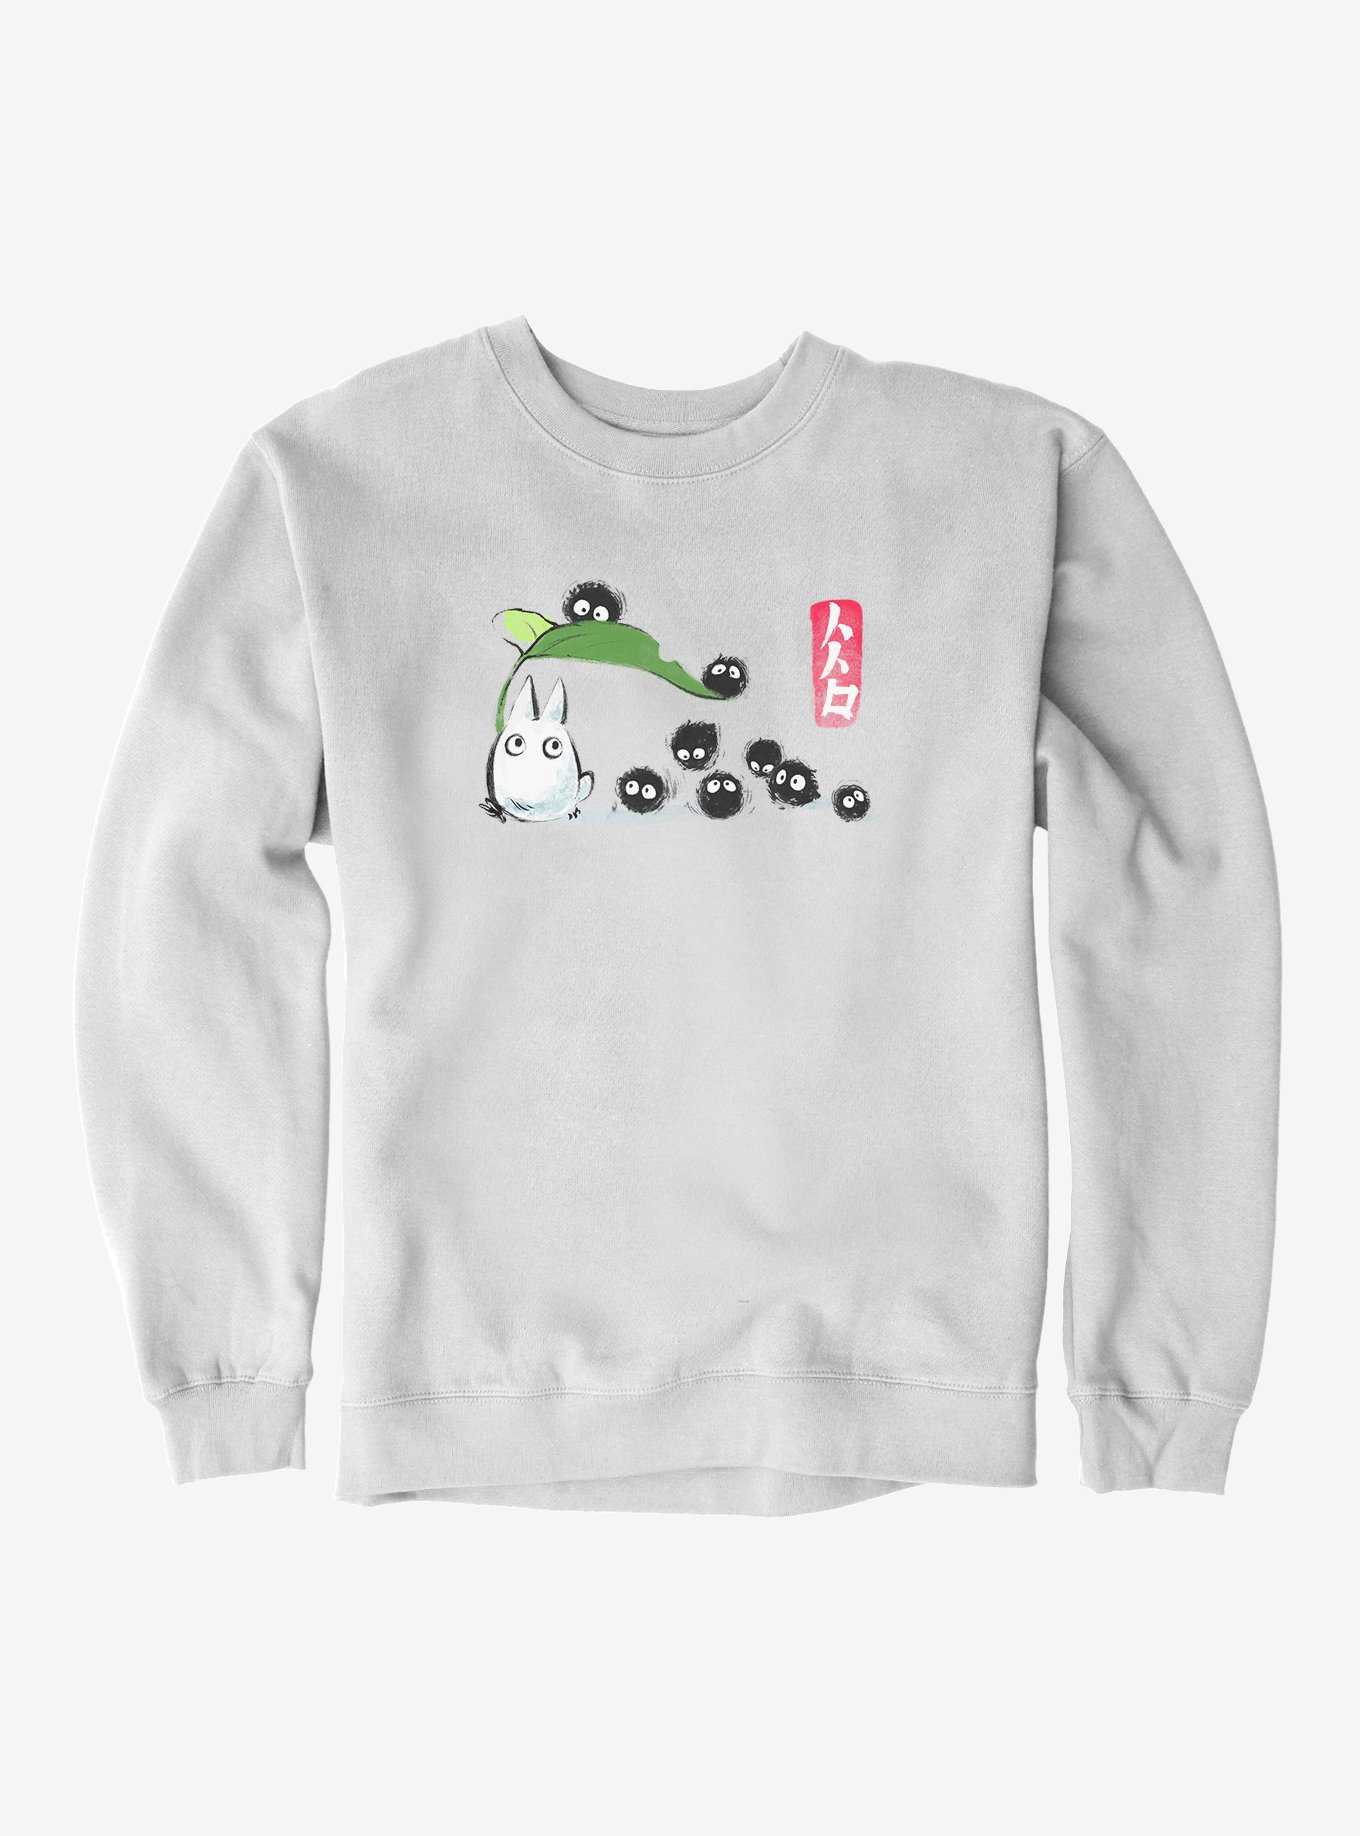 Studio Ghibli My Neighbor Totoro Soot Spirtes Follow Me Sweatshirt, , hi-res